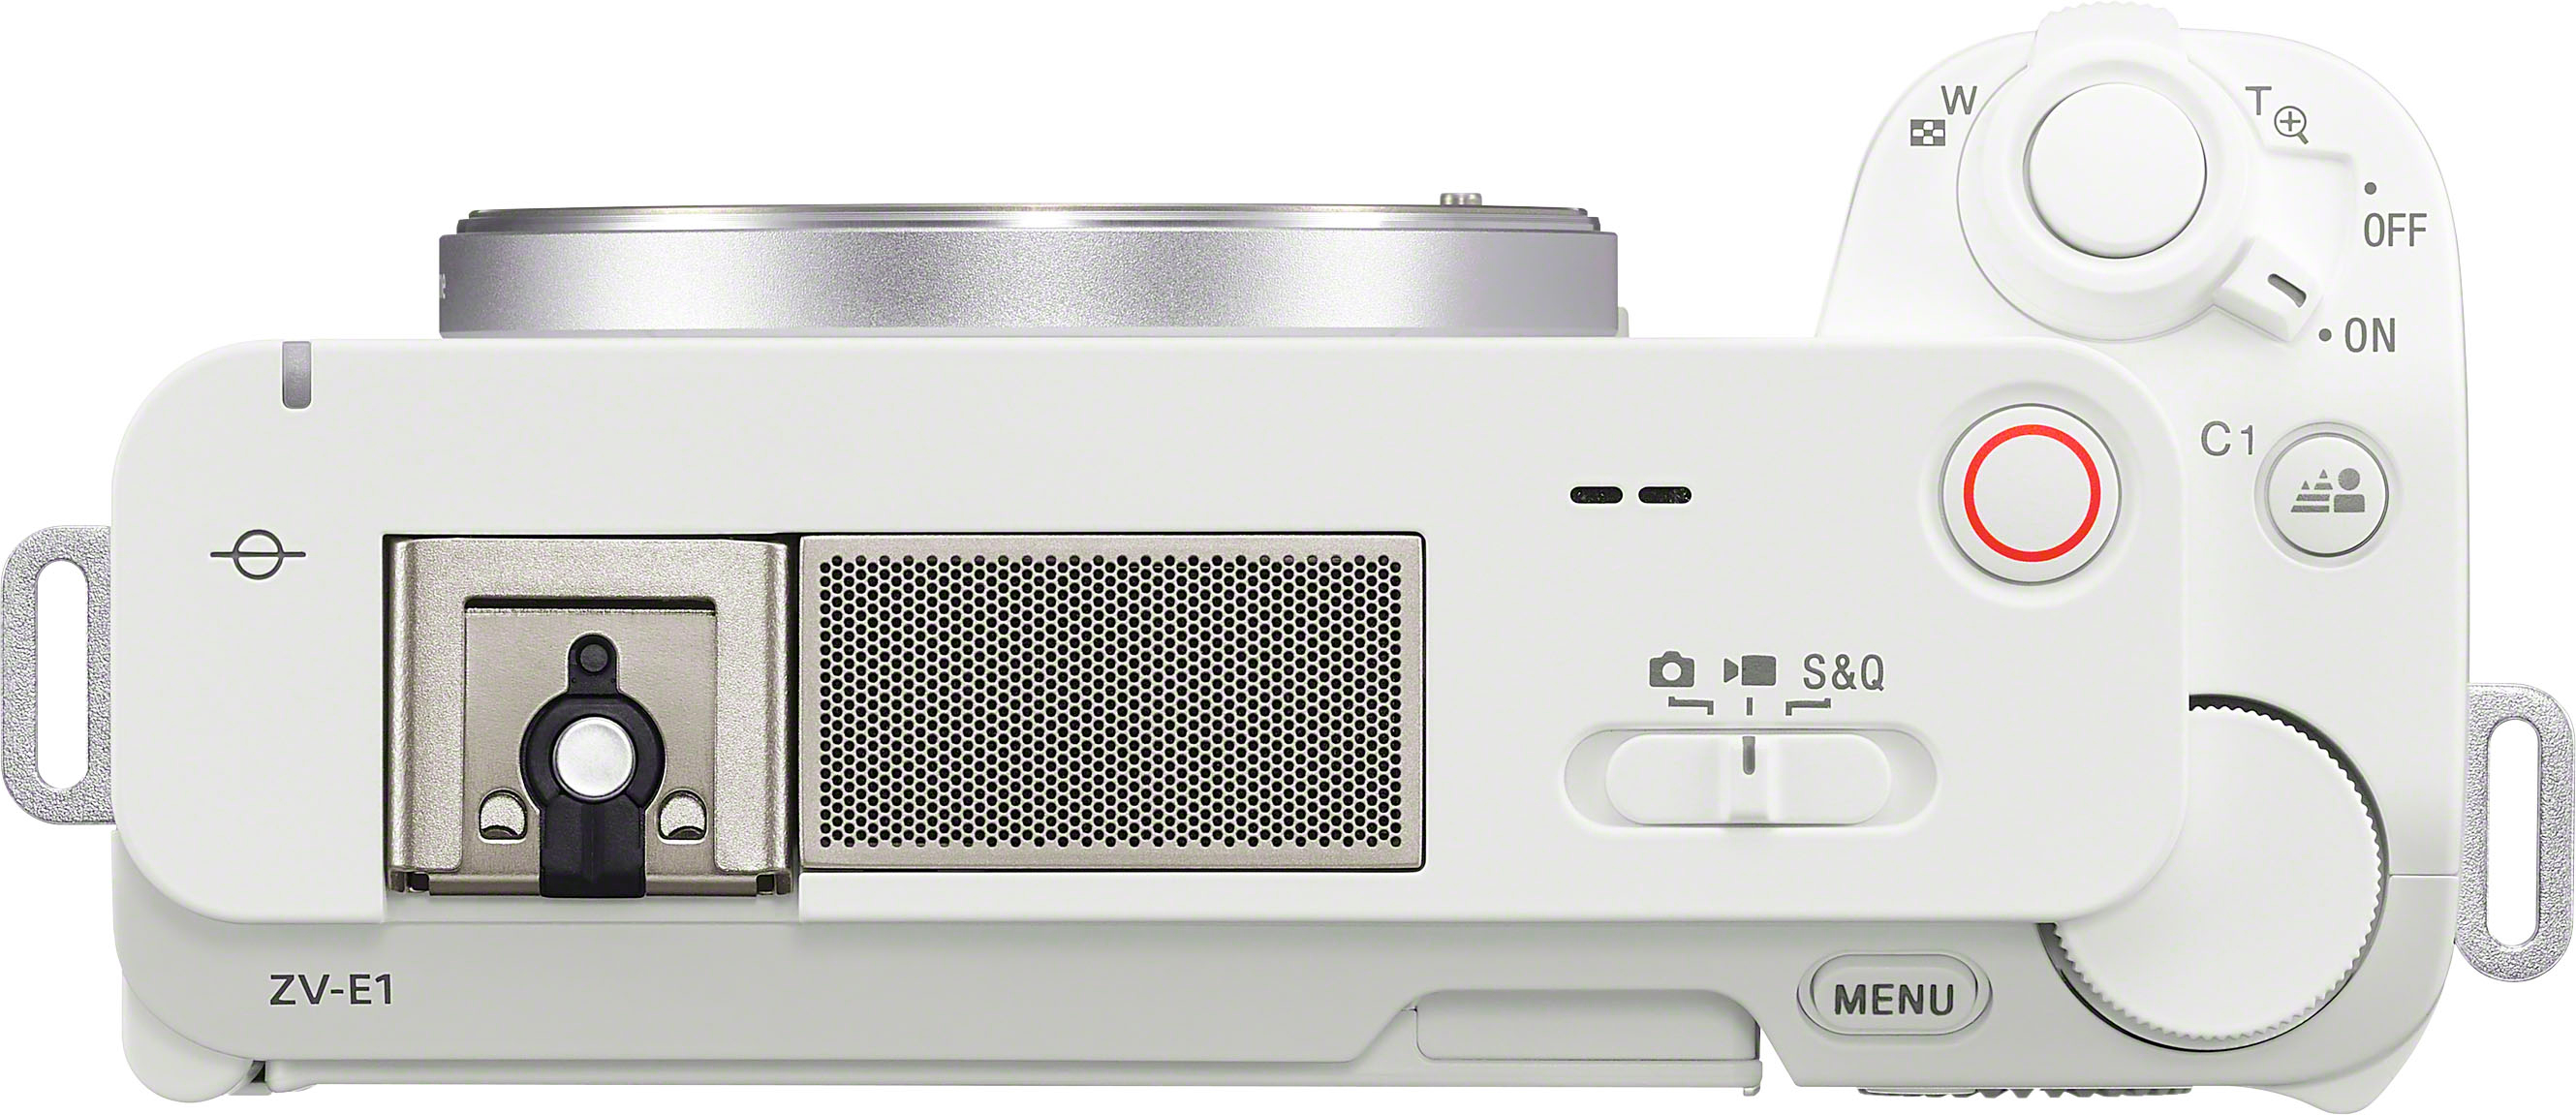 Sony ZV-E1 price, specs, availability announced - Camera Jabber